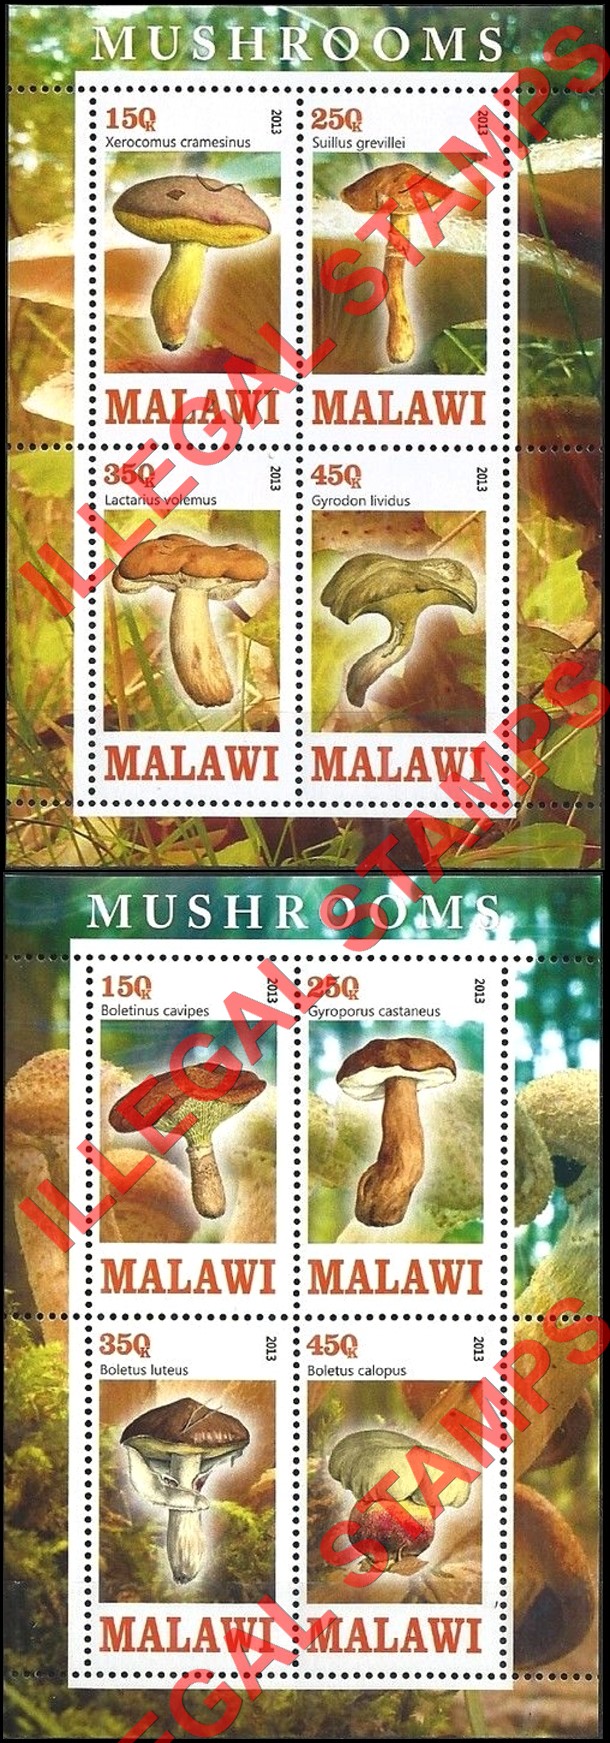 Malawi 2013 Mushrooms Illegal Stamp Souvenir Sheets of 4 (Part 2)